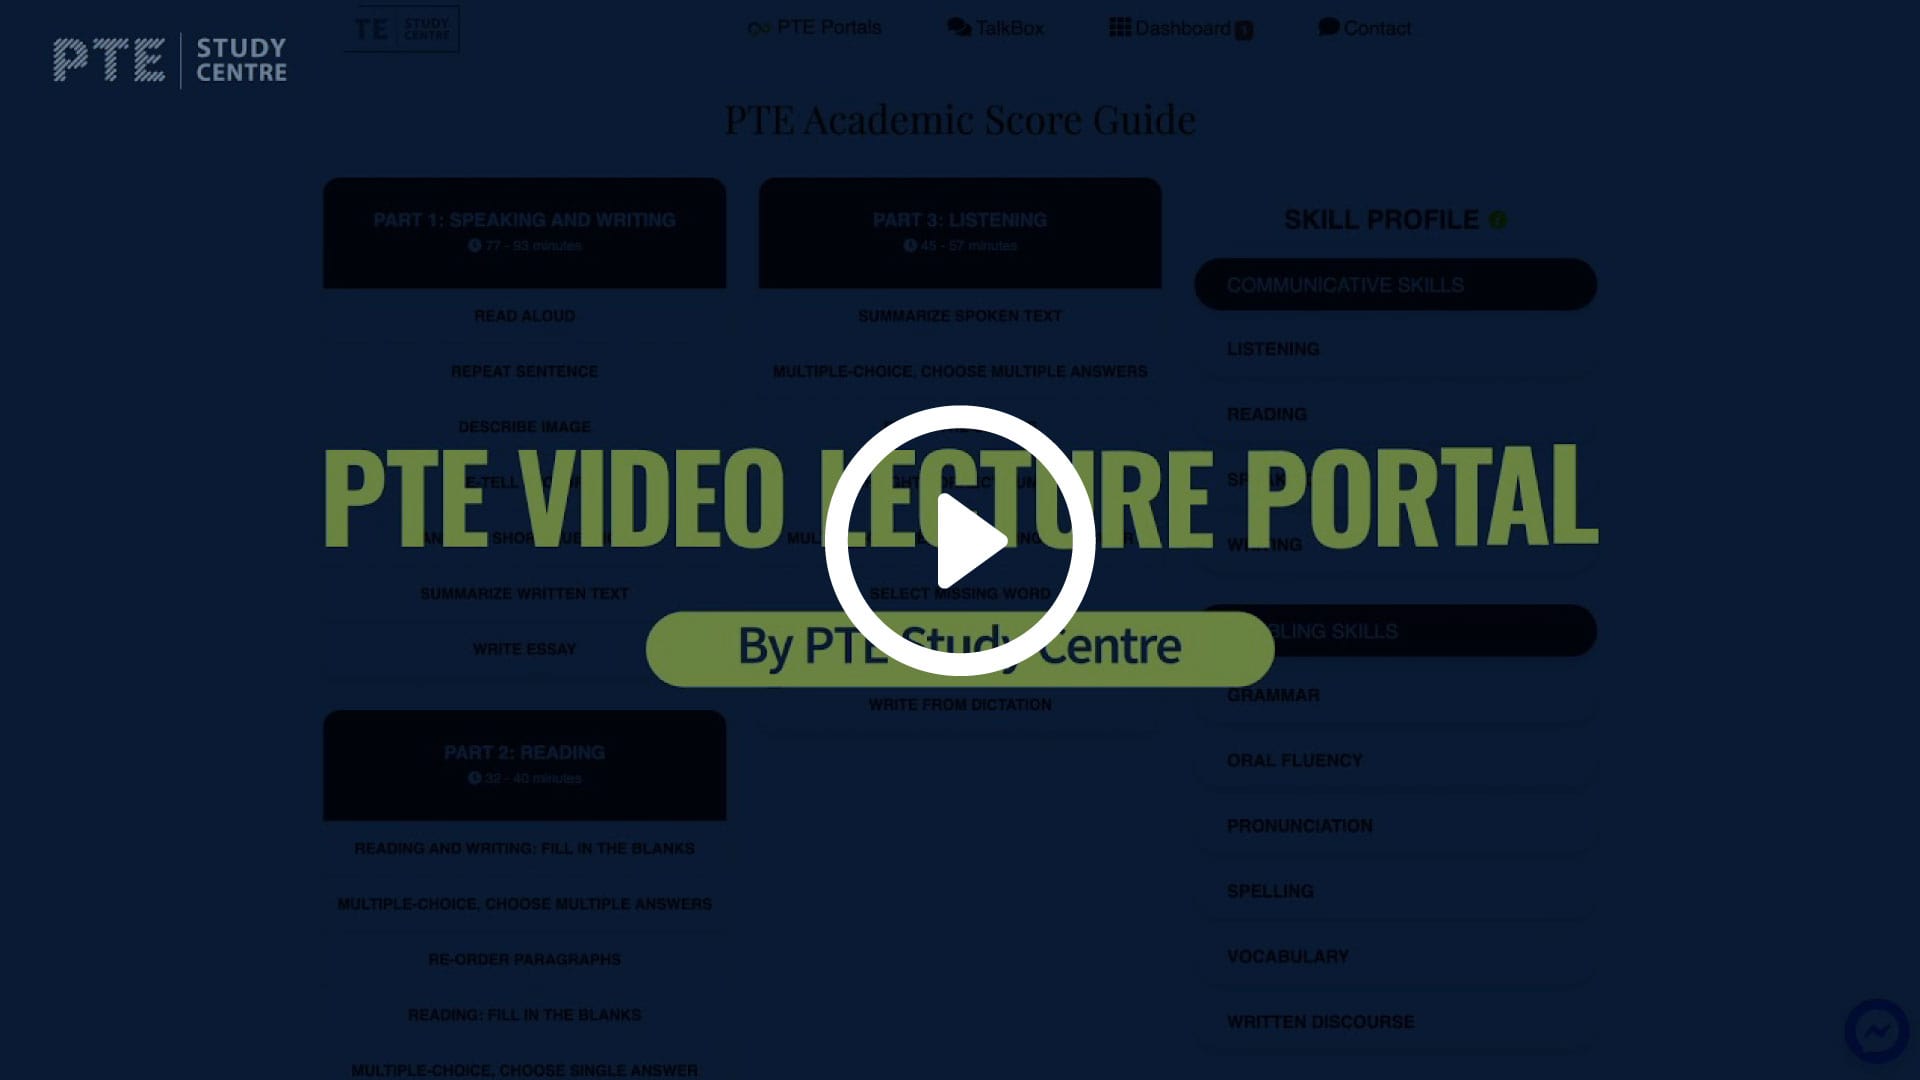 Video Lecture Portal YT